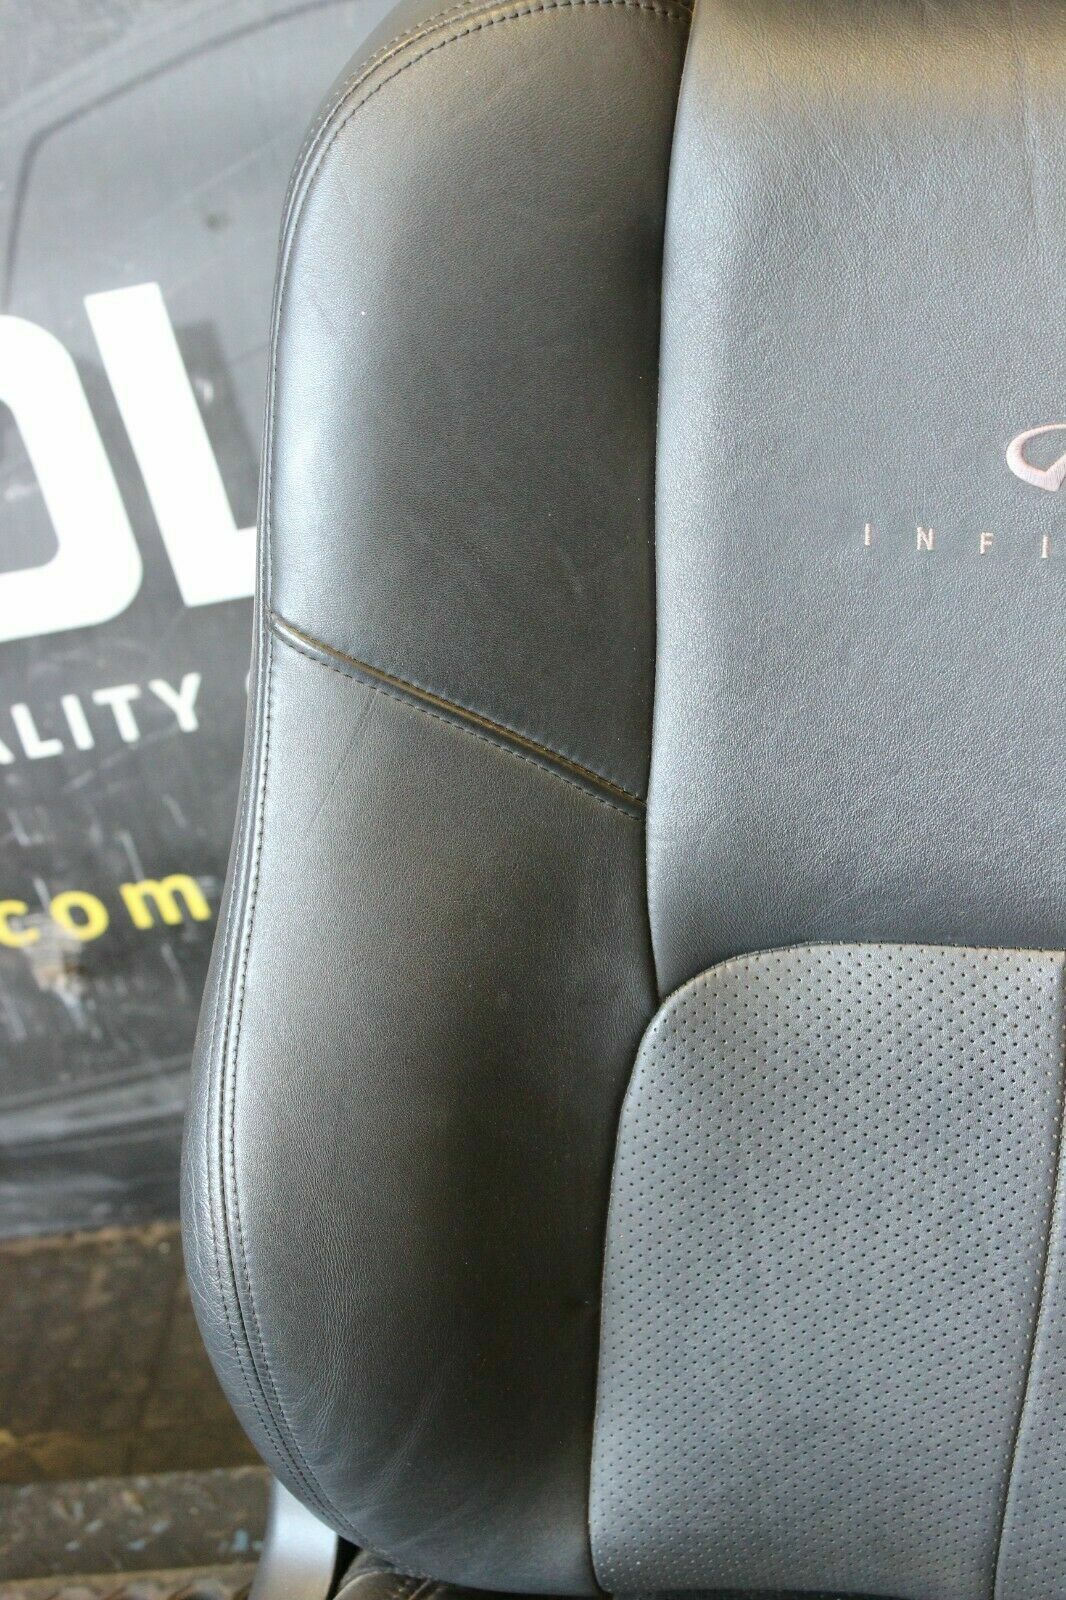 2006 Infiniti G35 Sedan Front Right Passenger Seat Assembly RH OEM Black Leather